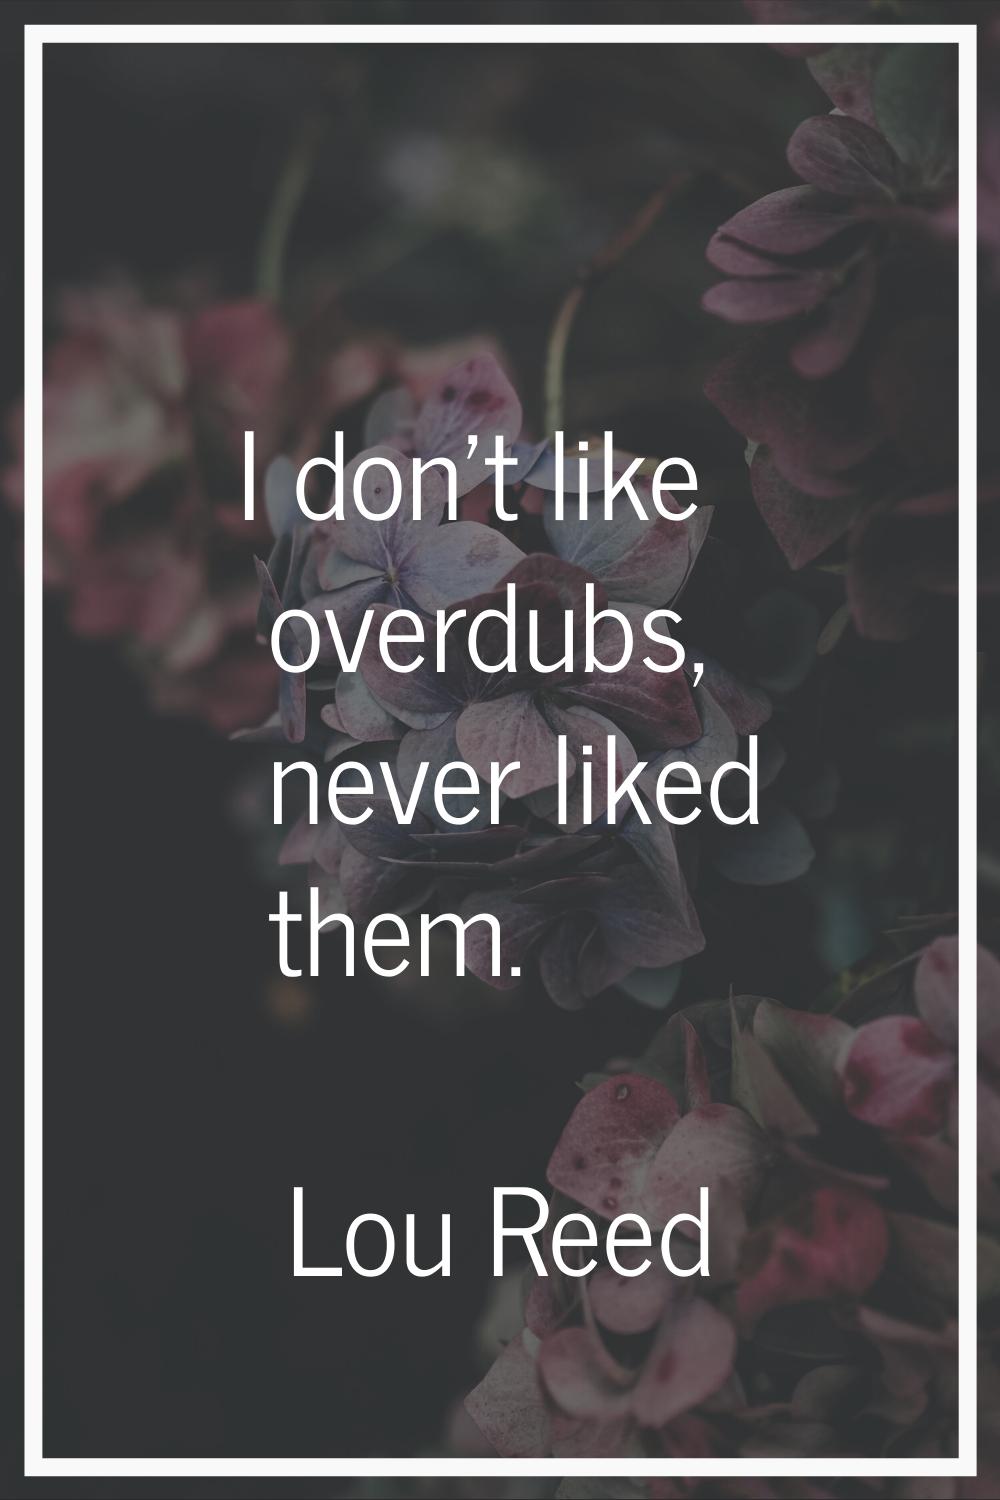 I don't like overdubs, never liked them.